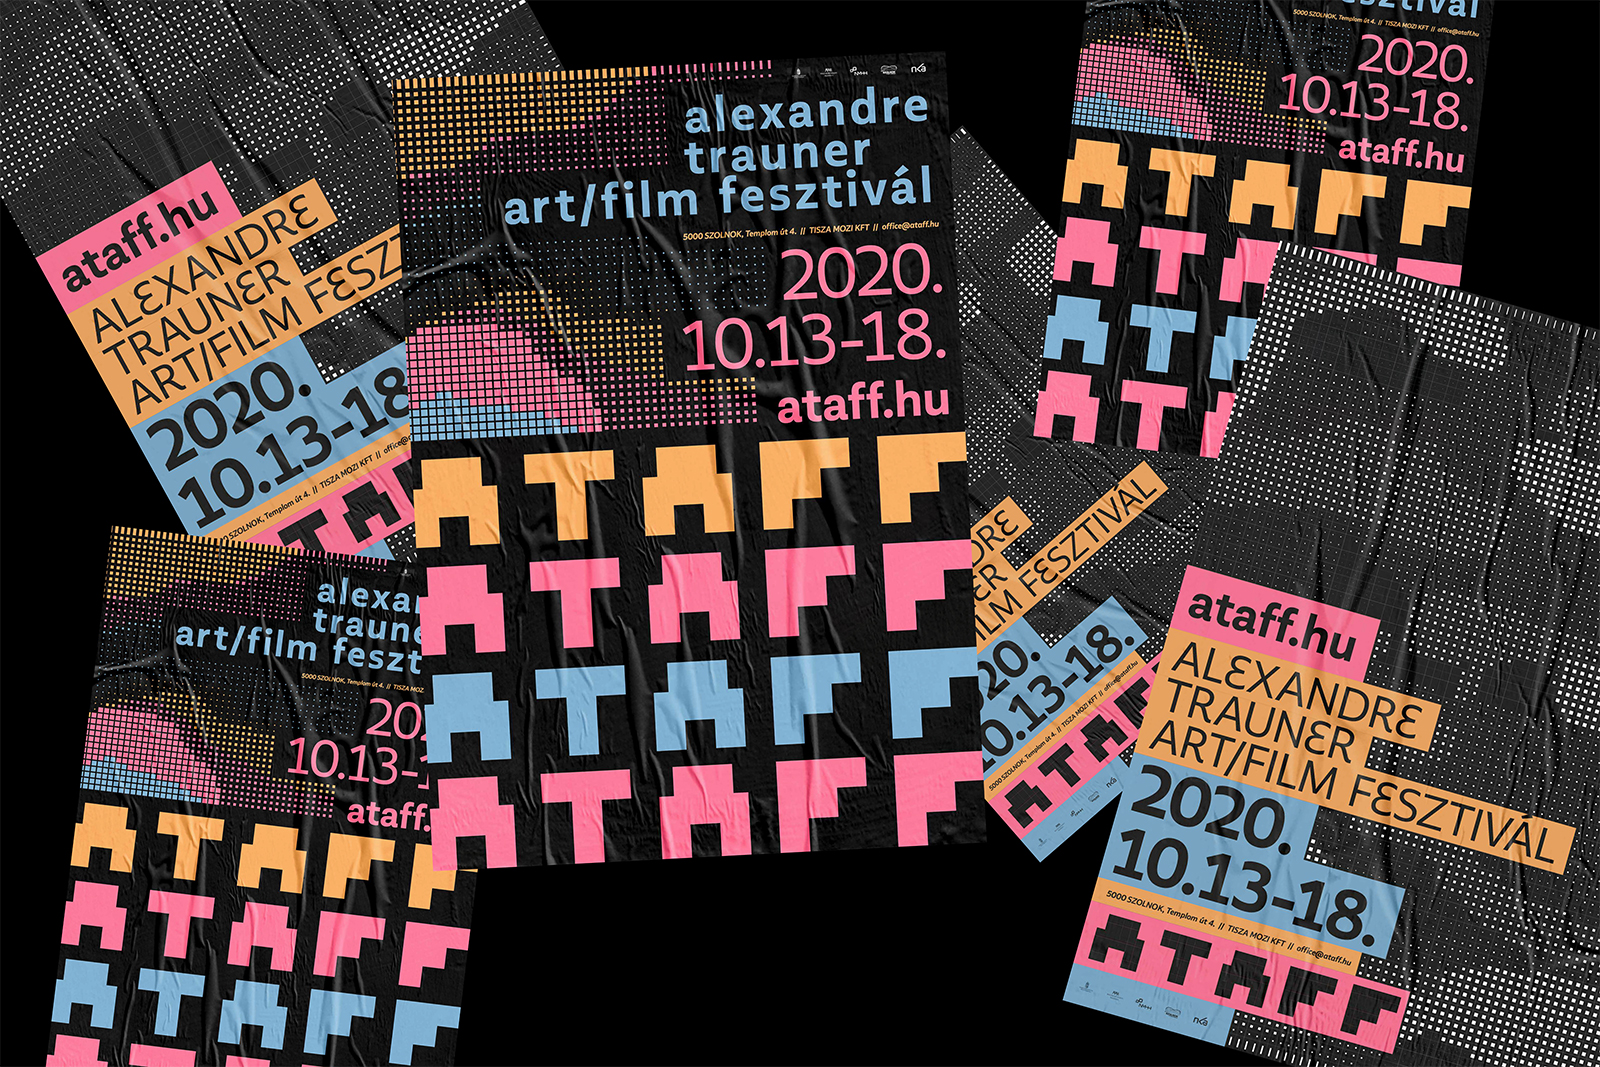 Péter Morvai, graphic designer's work won the image tender of ATAFF